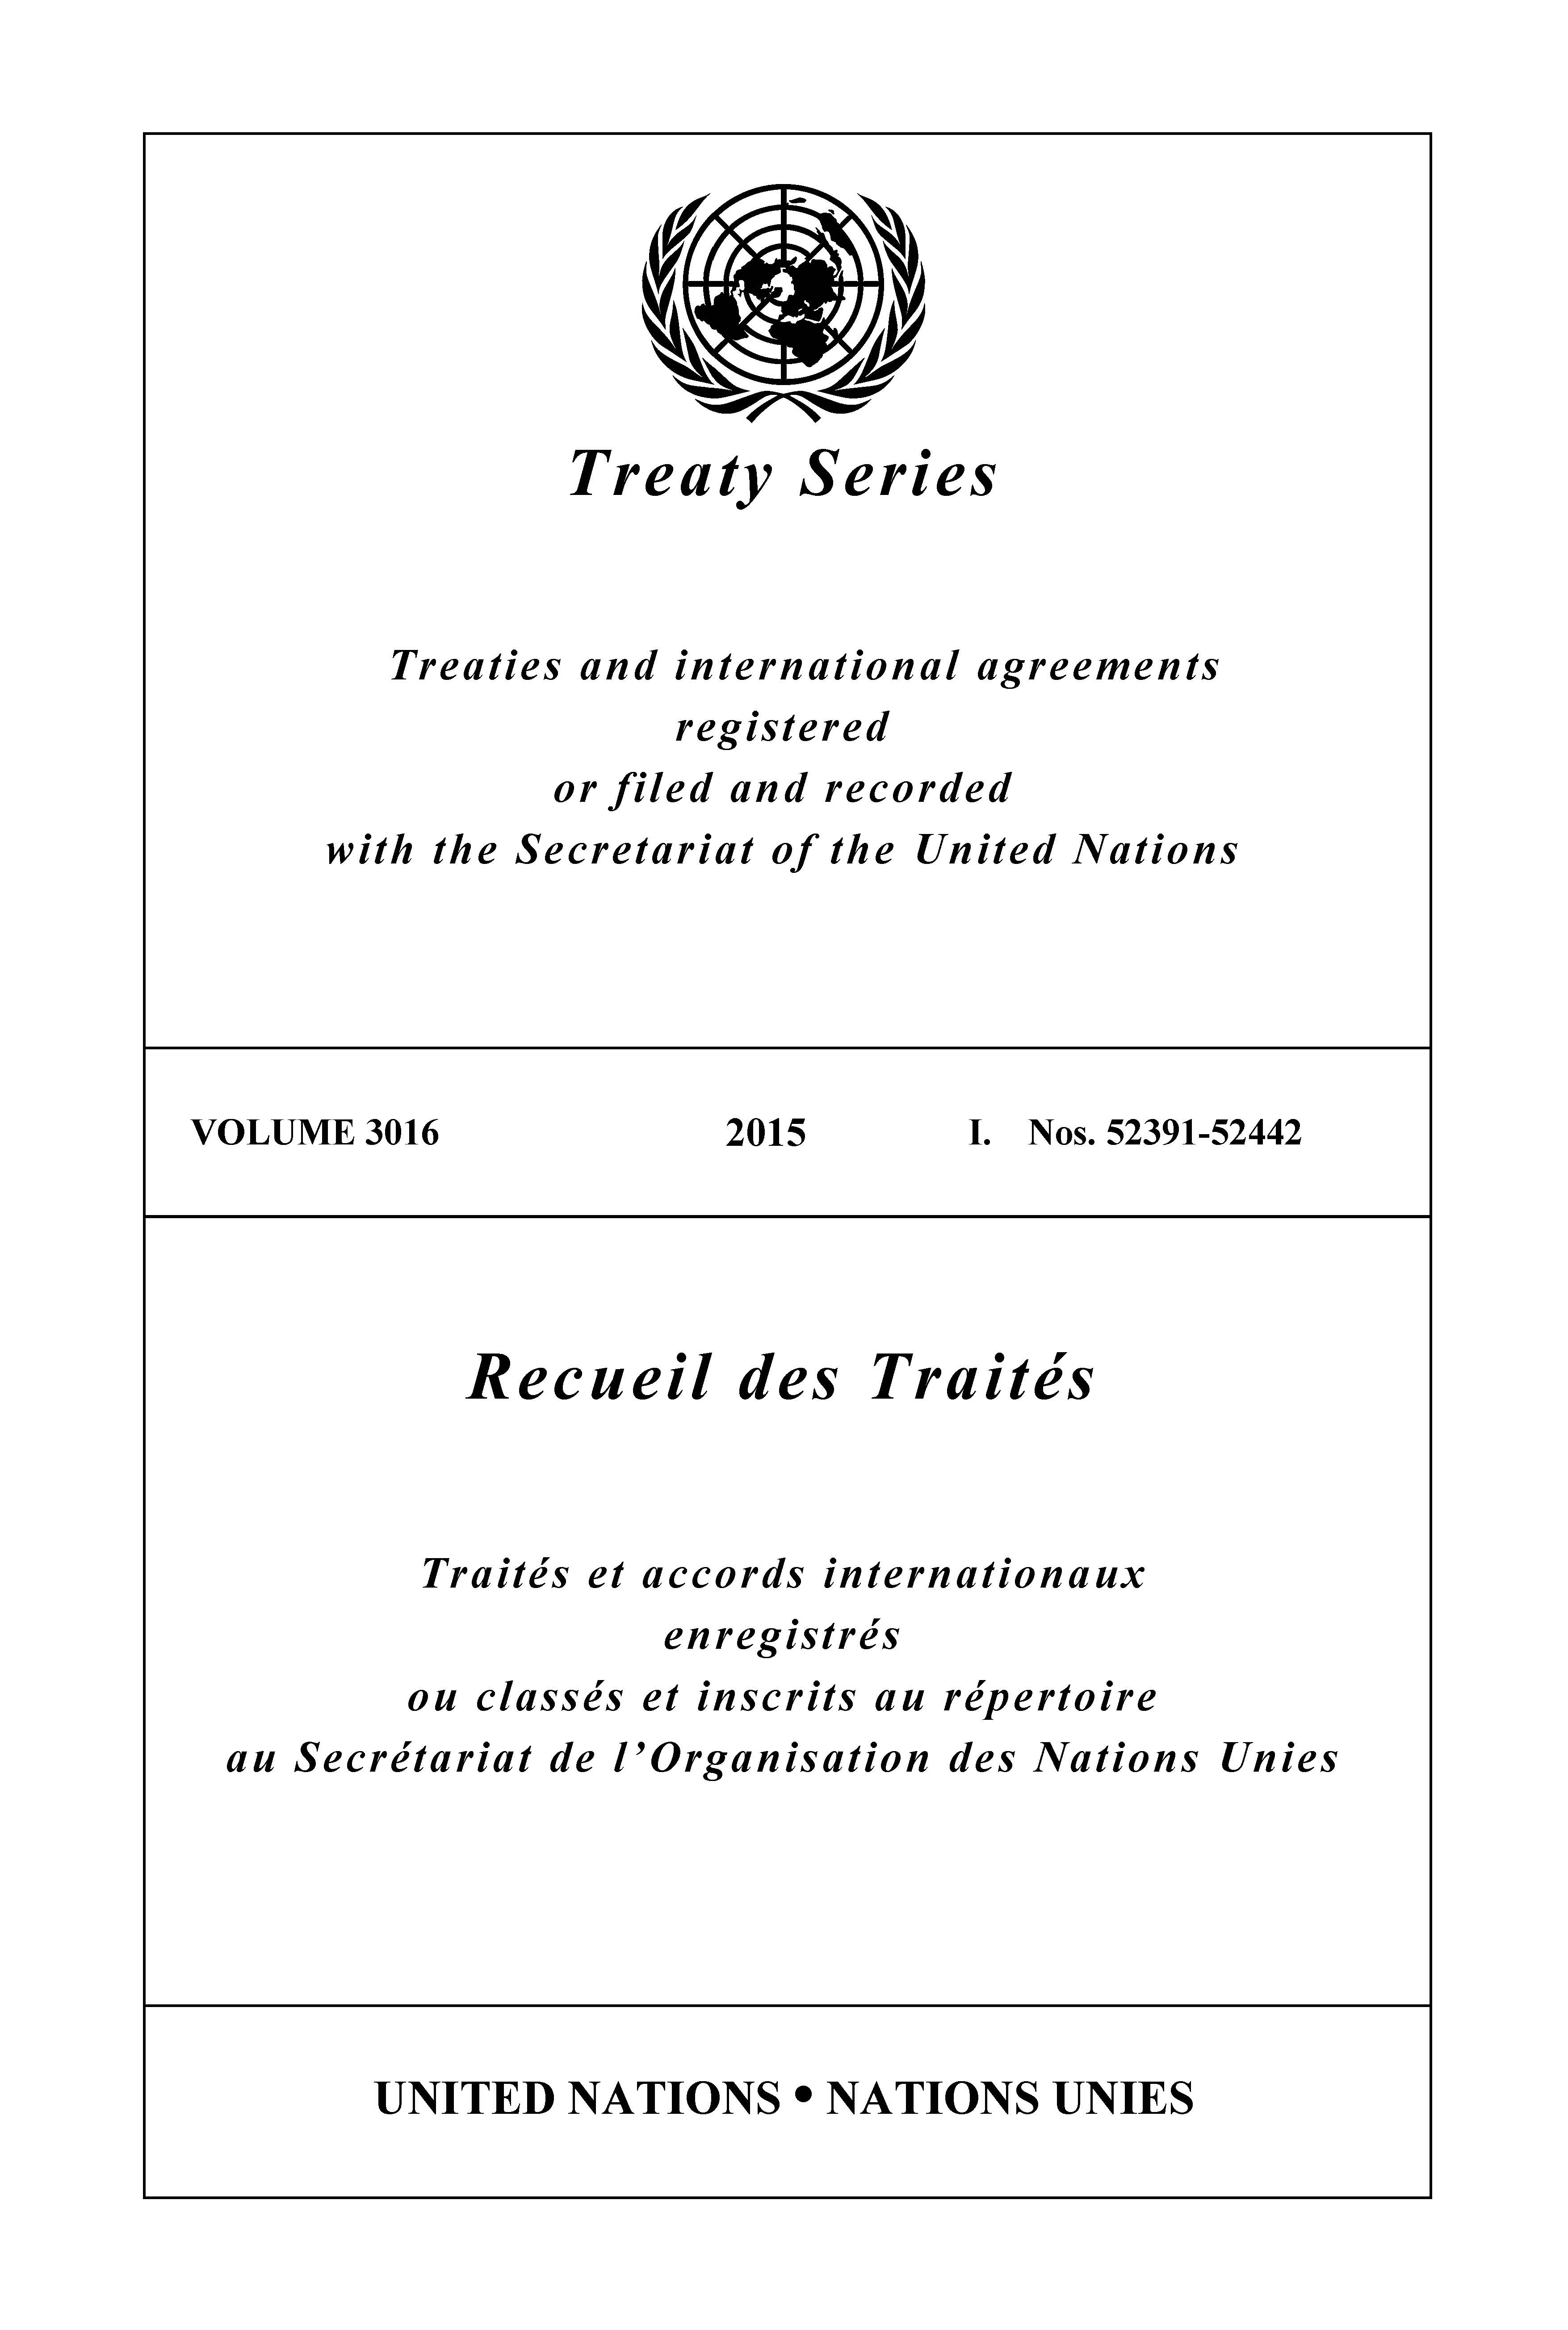 image of Treaty Series 3016